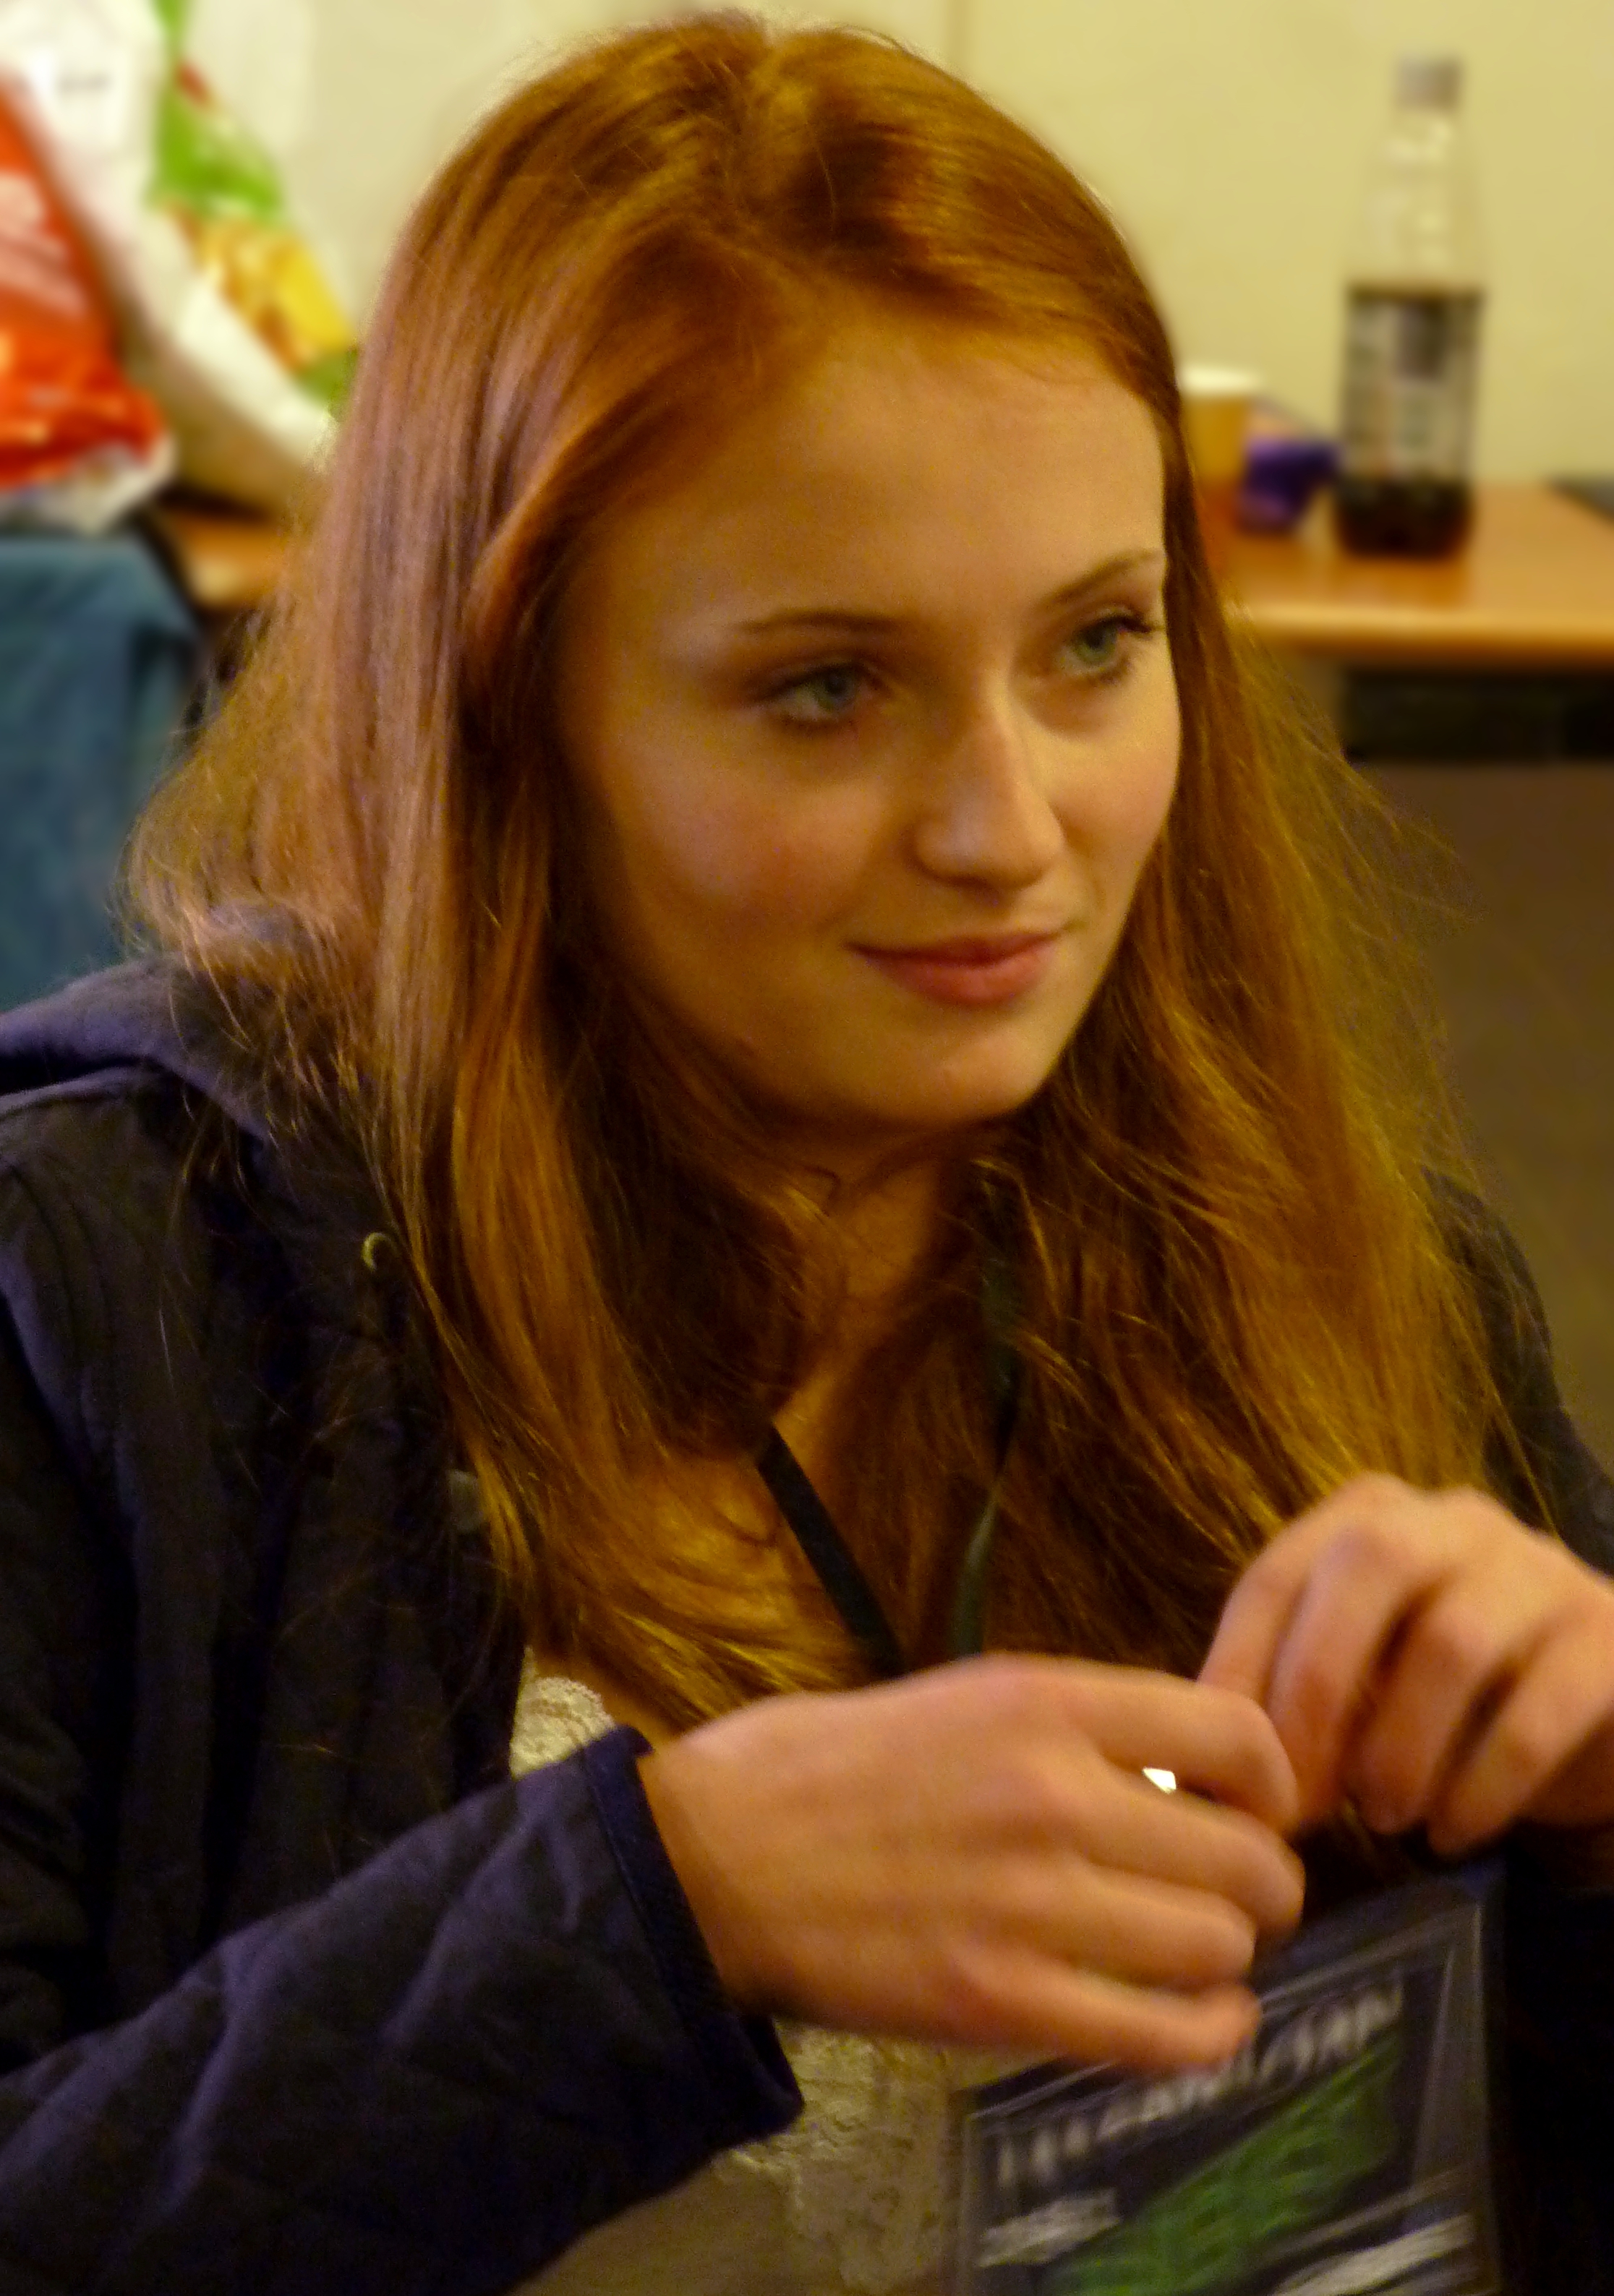 File:Sophie Turner (actress) 2011 cropped.jpg - Wikipedia2232 x 3176